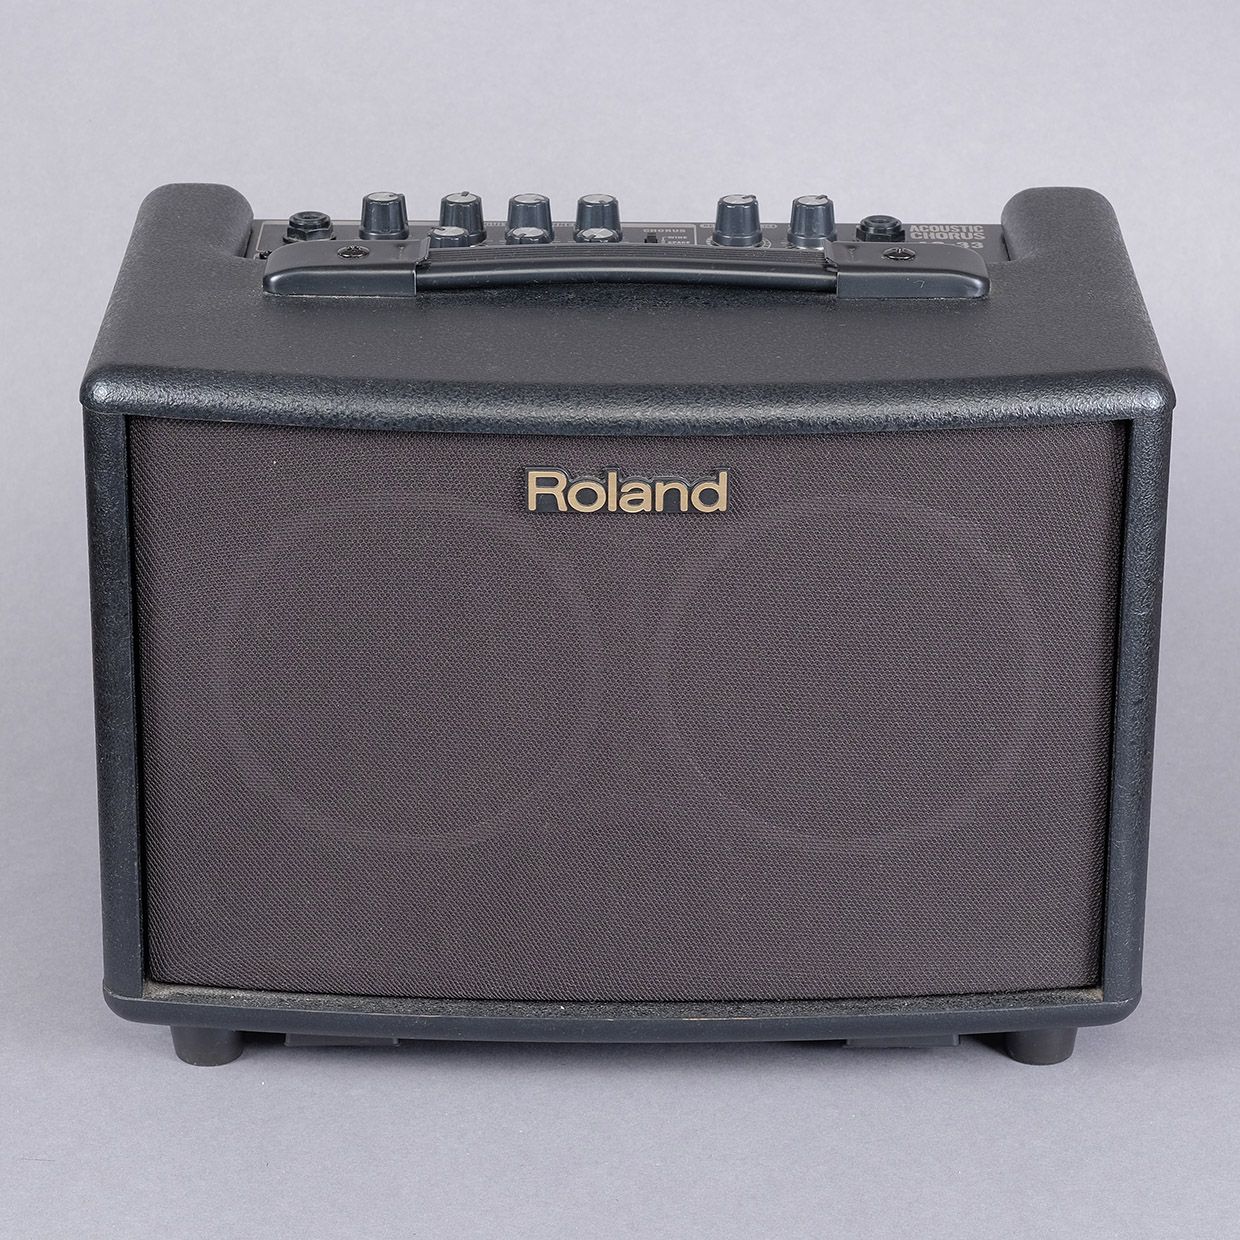 Null Amplificador, "Roland", Chorus AC 33, altura 23,5 x 31,5 x 21,5 cm